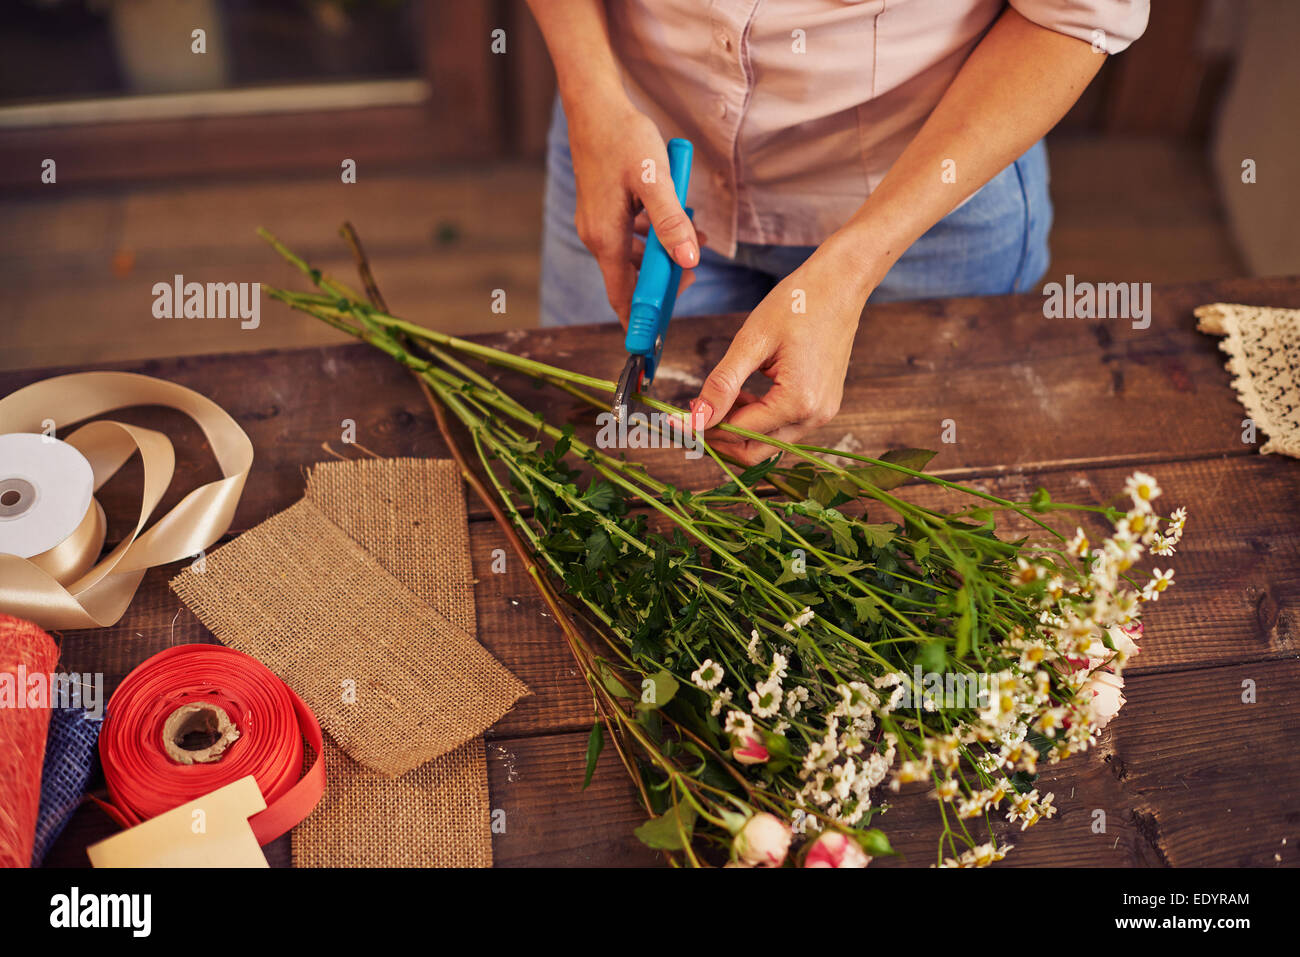 Florist cutting flower stems Stock Photo